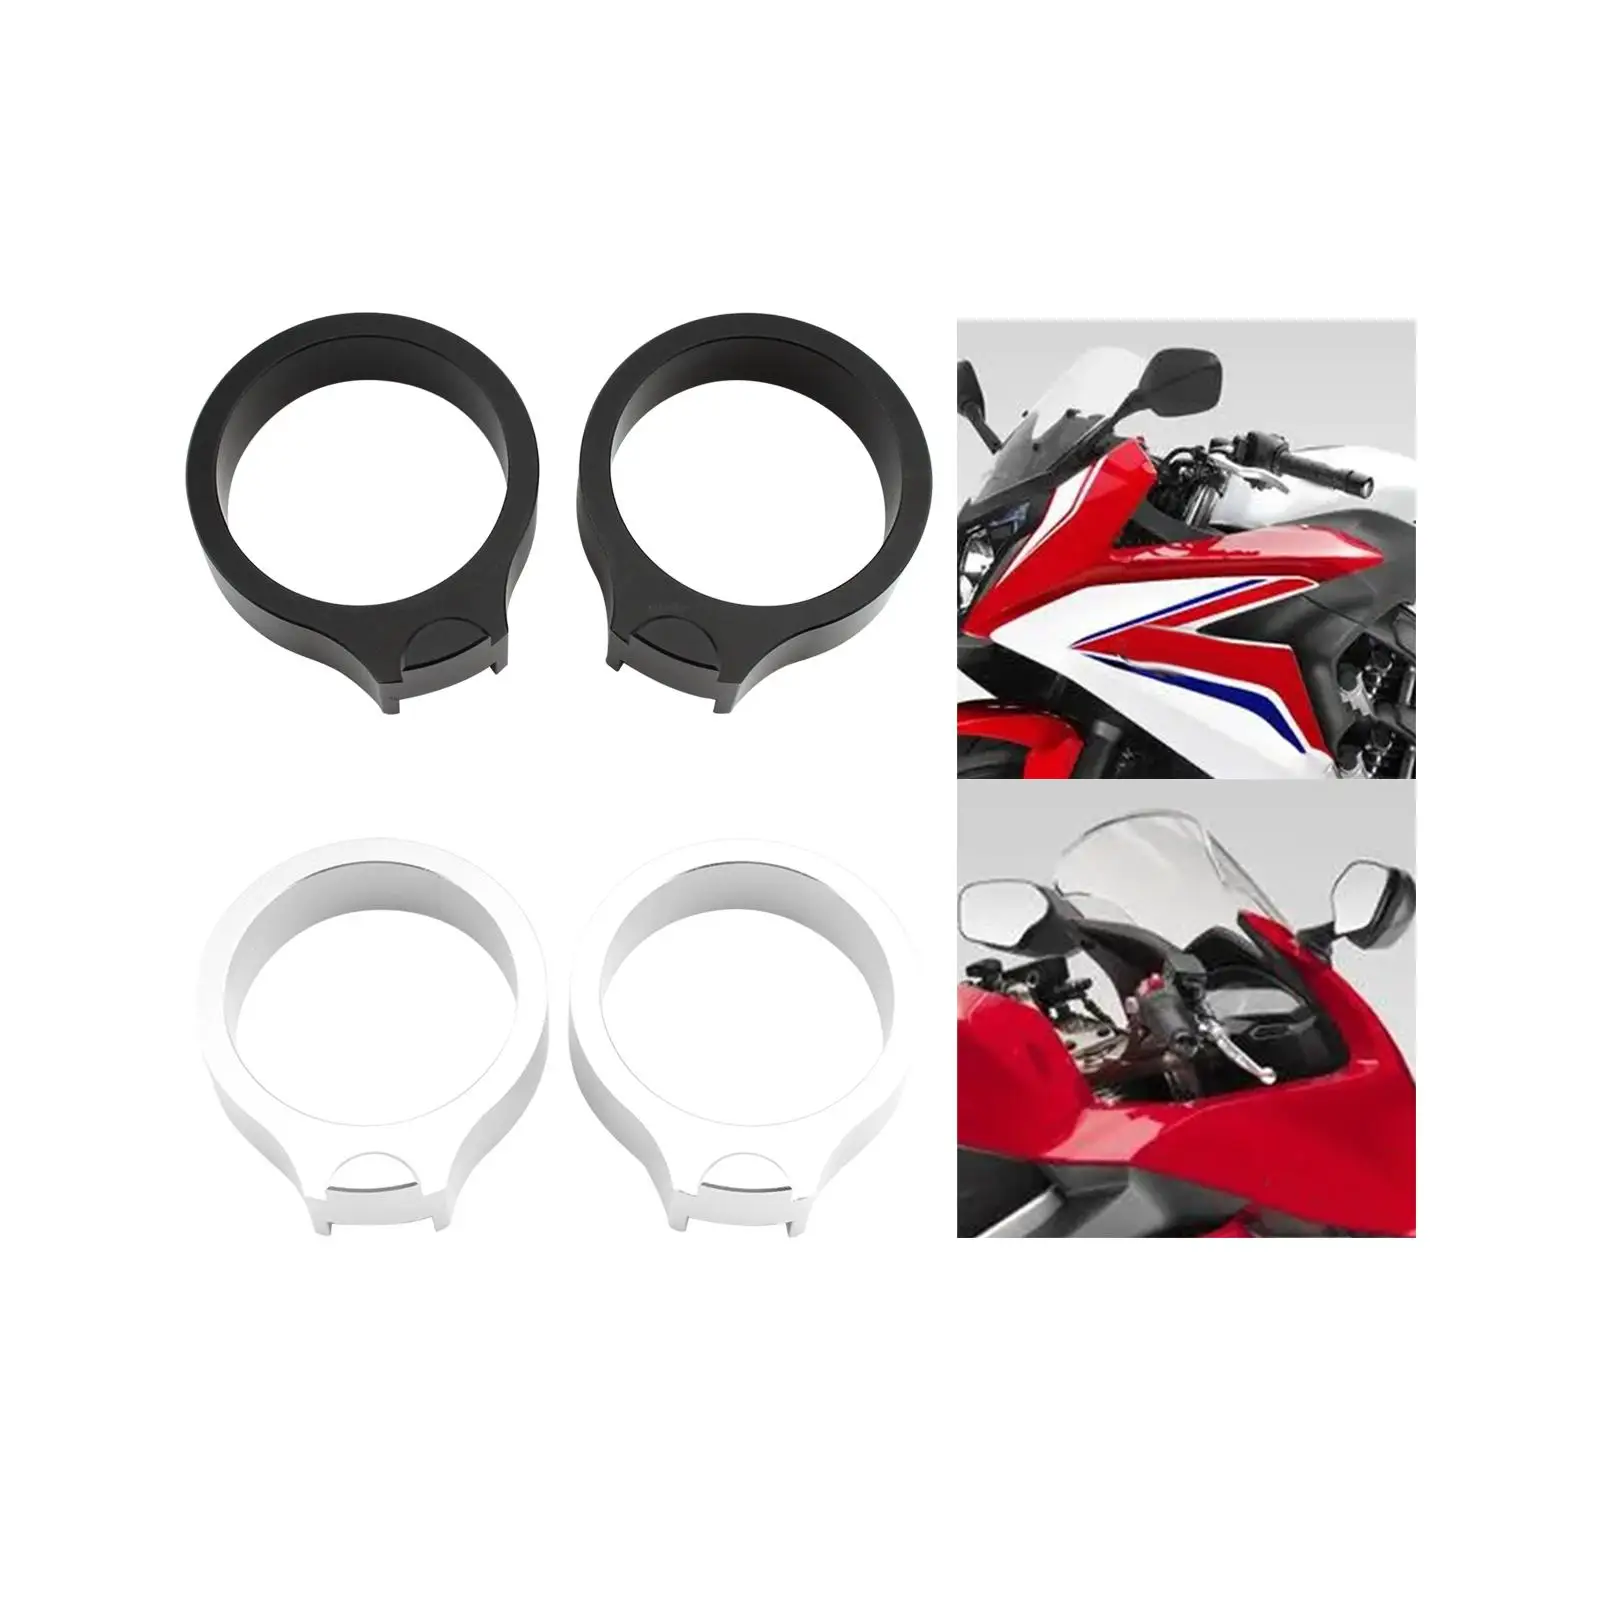 2x Motorcycle Handlebar Risers Motorcycle Accessories for Honda CBR600F 43mm Fork Bikes CBR1100XX Super Blackbird 43mm